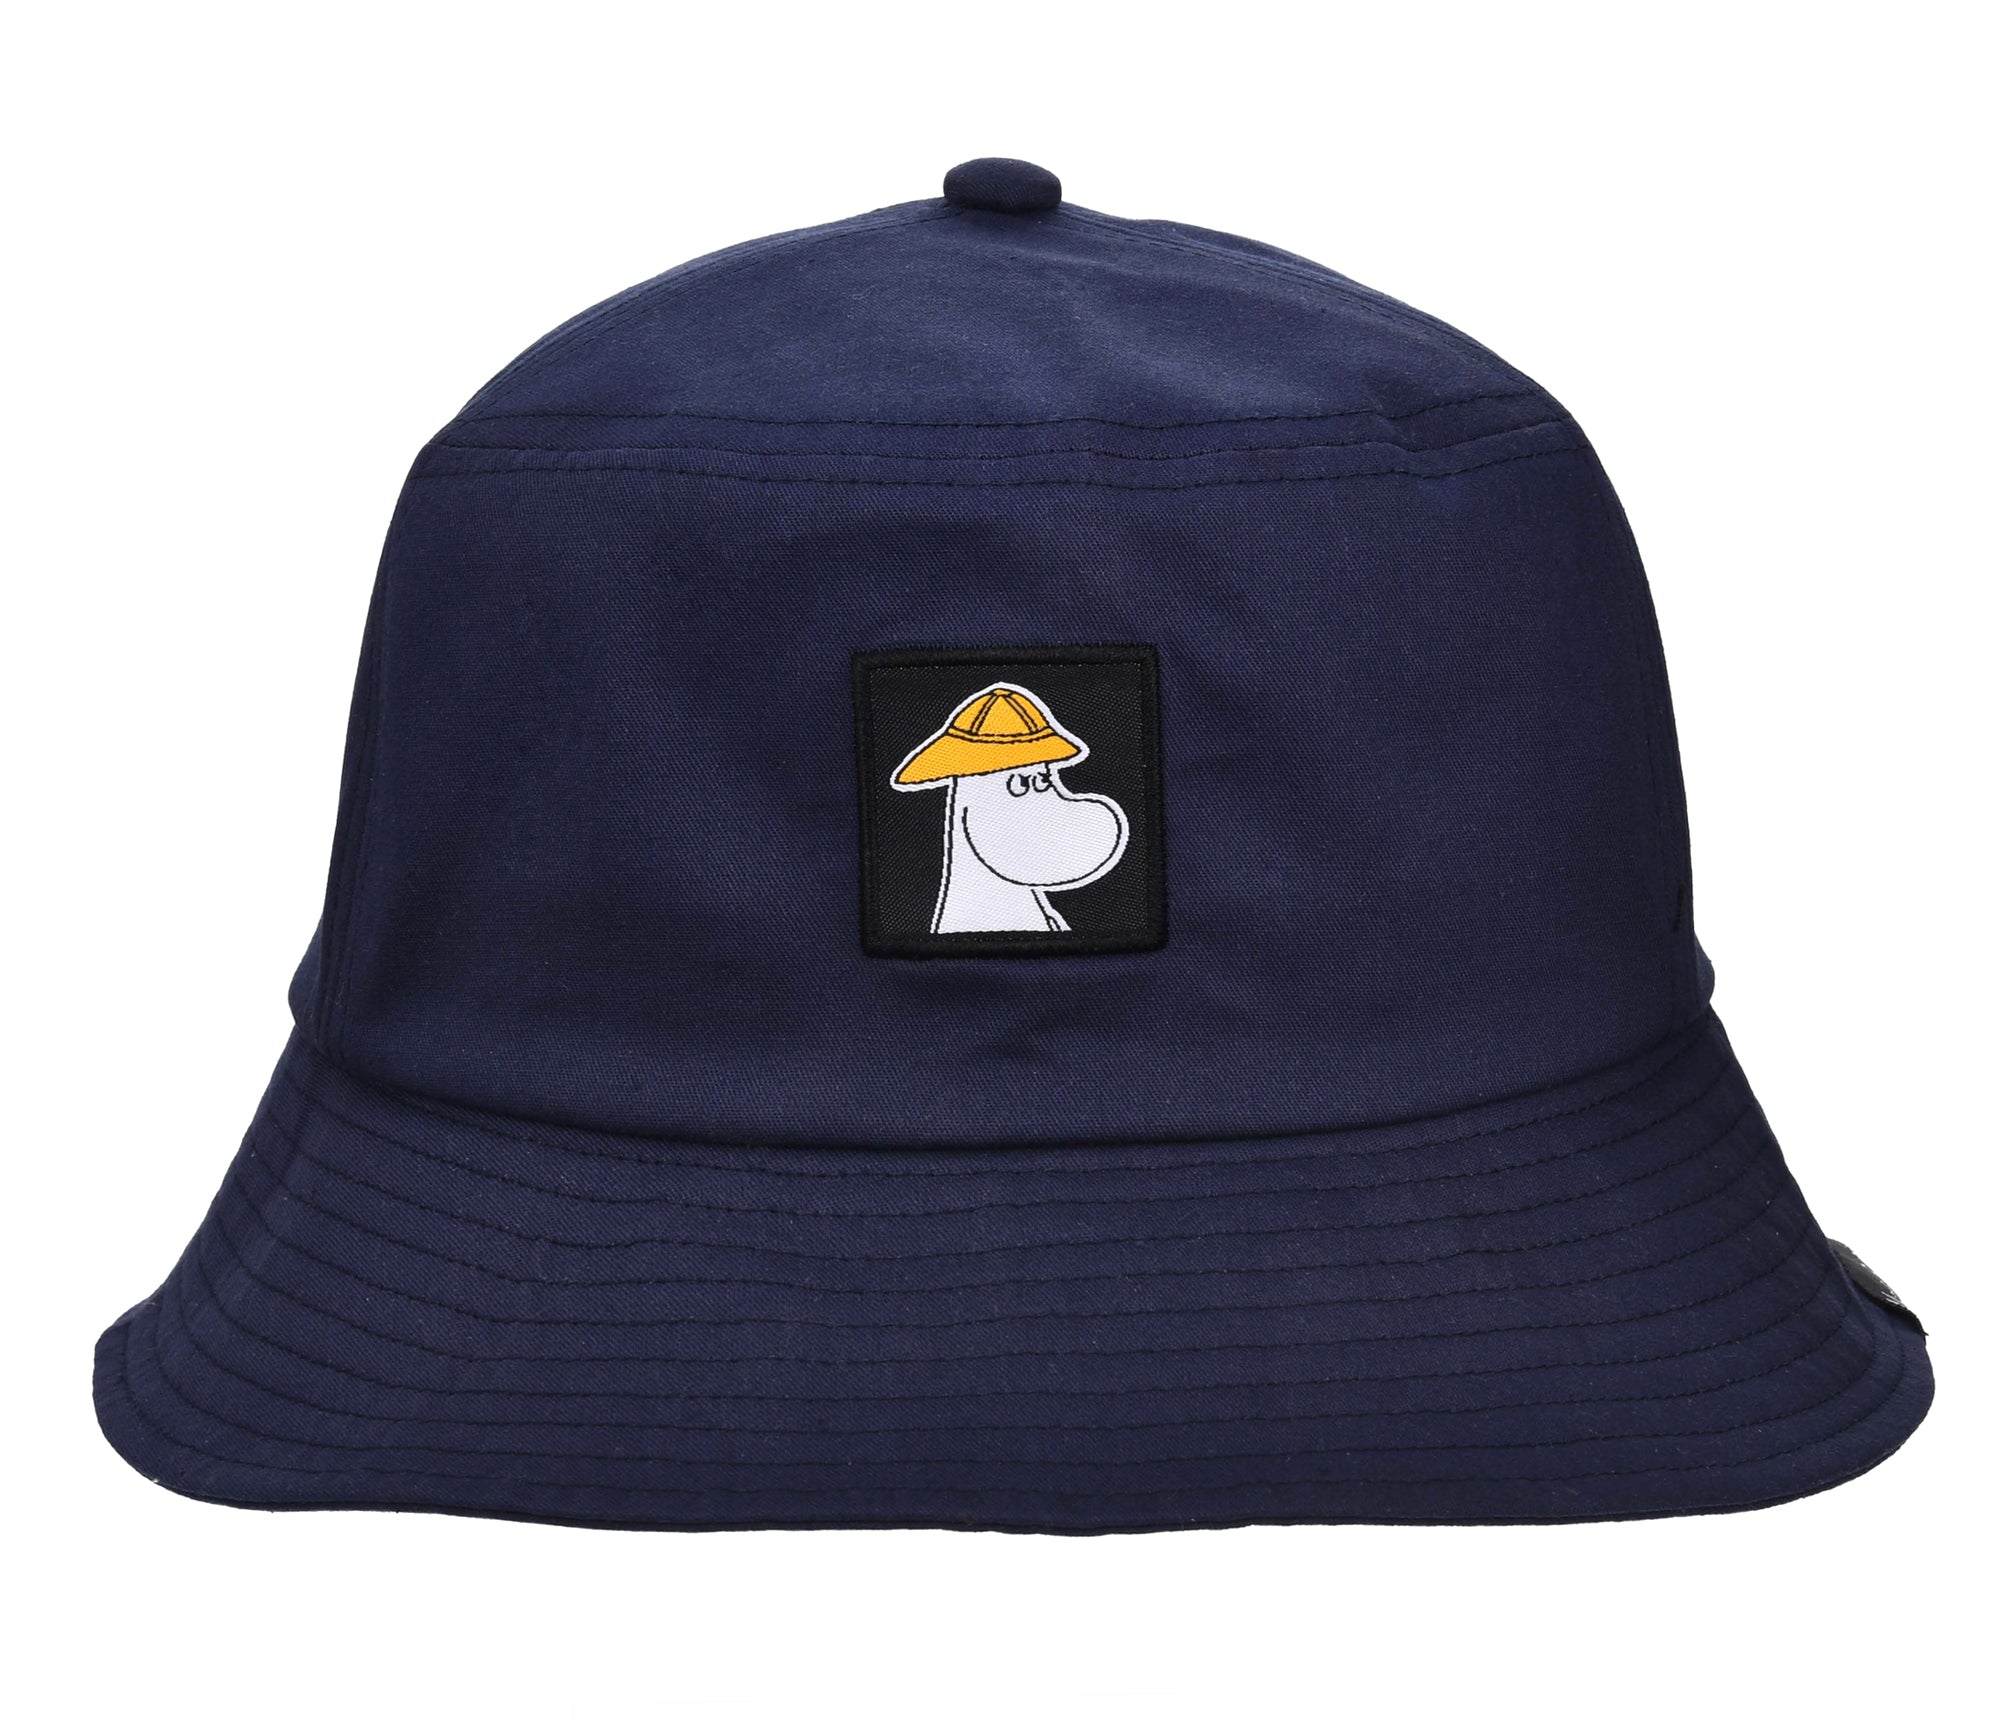 Moominpappa Bucket Hat - Navy